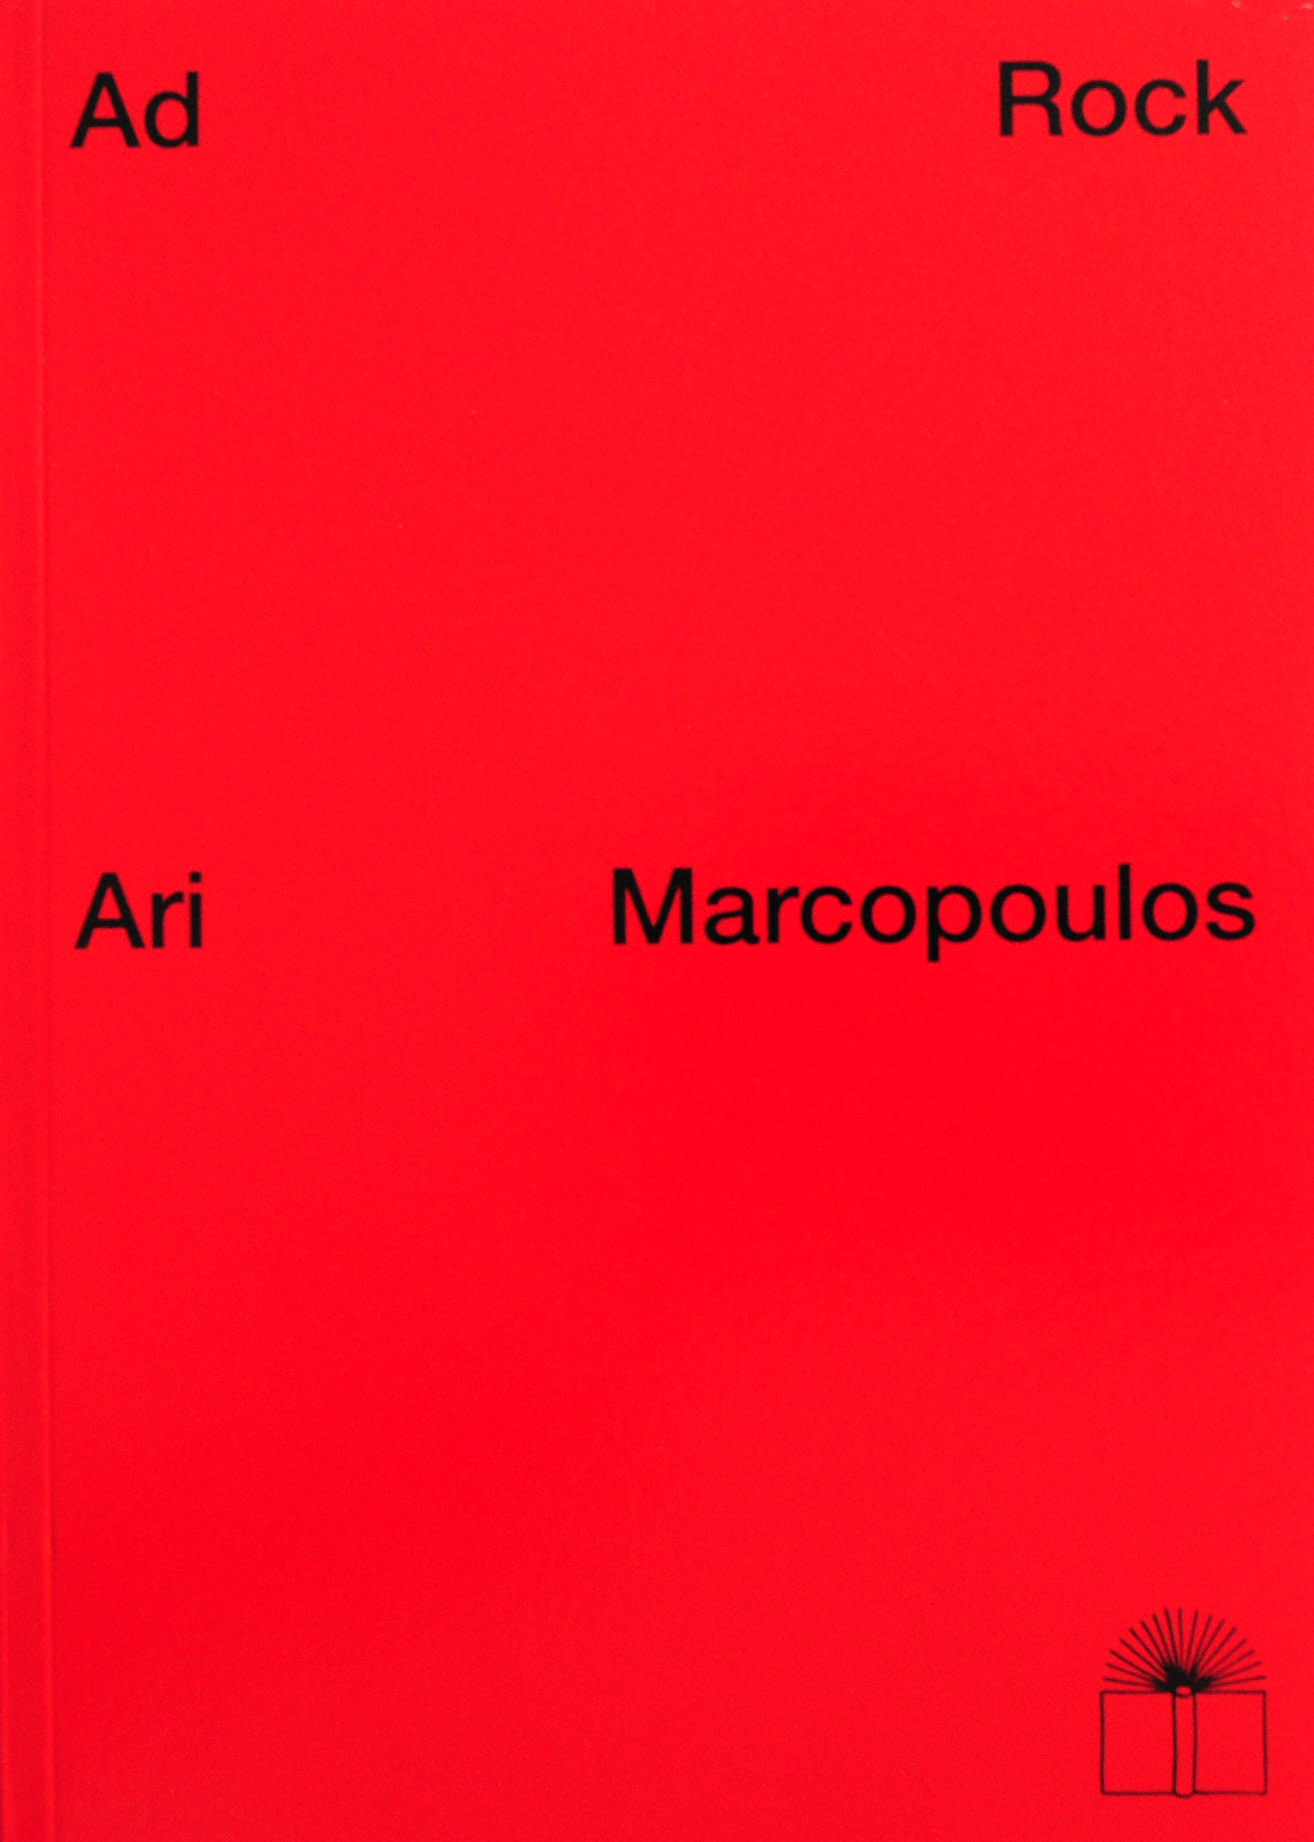 Ad Rock Ari Marcopoulos